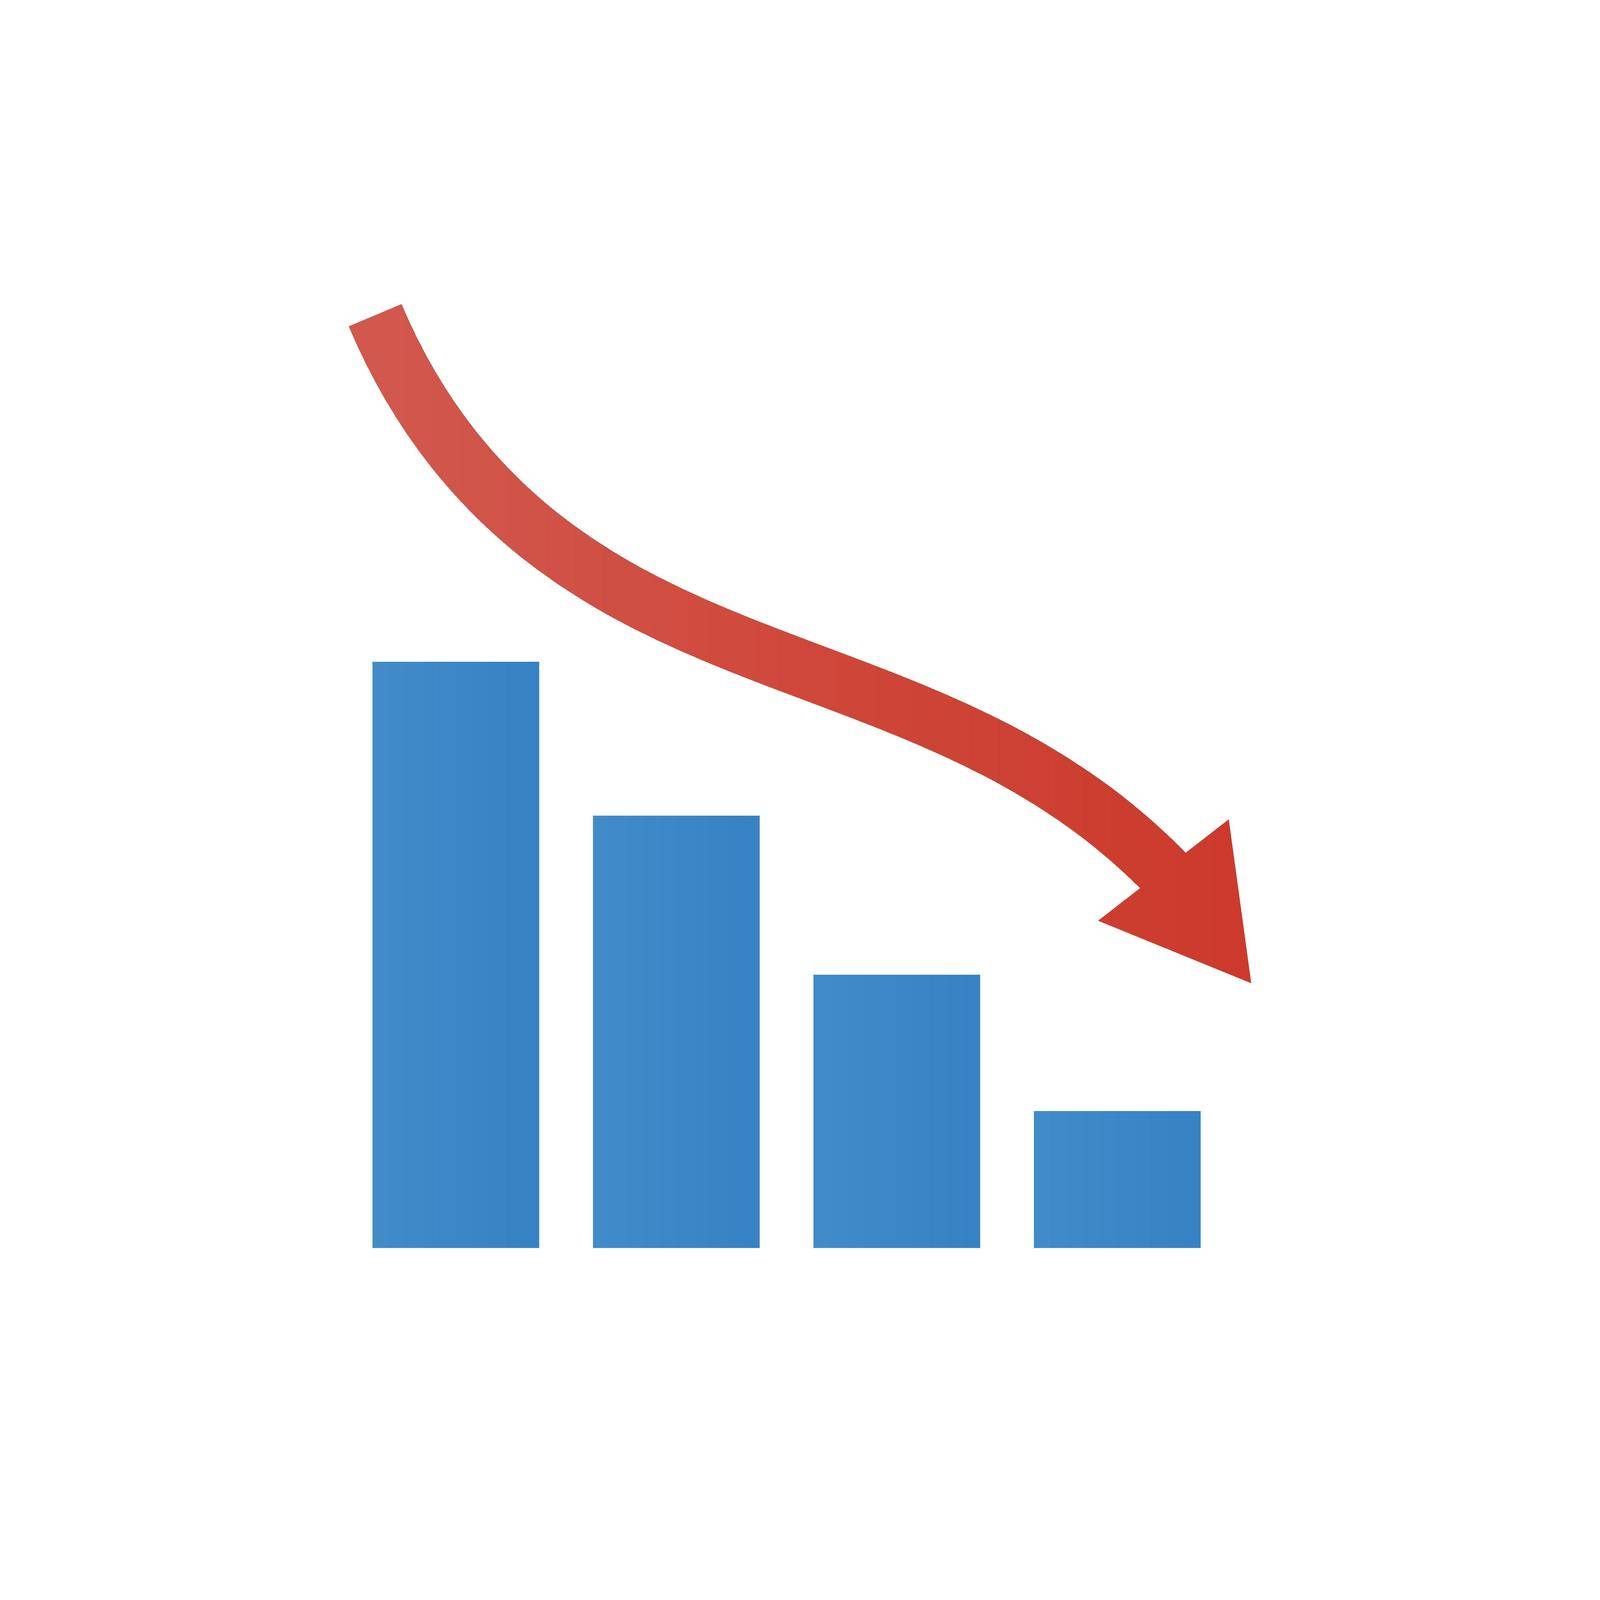 Decreasing arrow and bar graph icon. Decline in business performance. Editable vector.